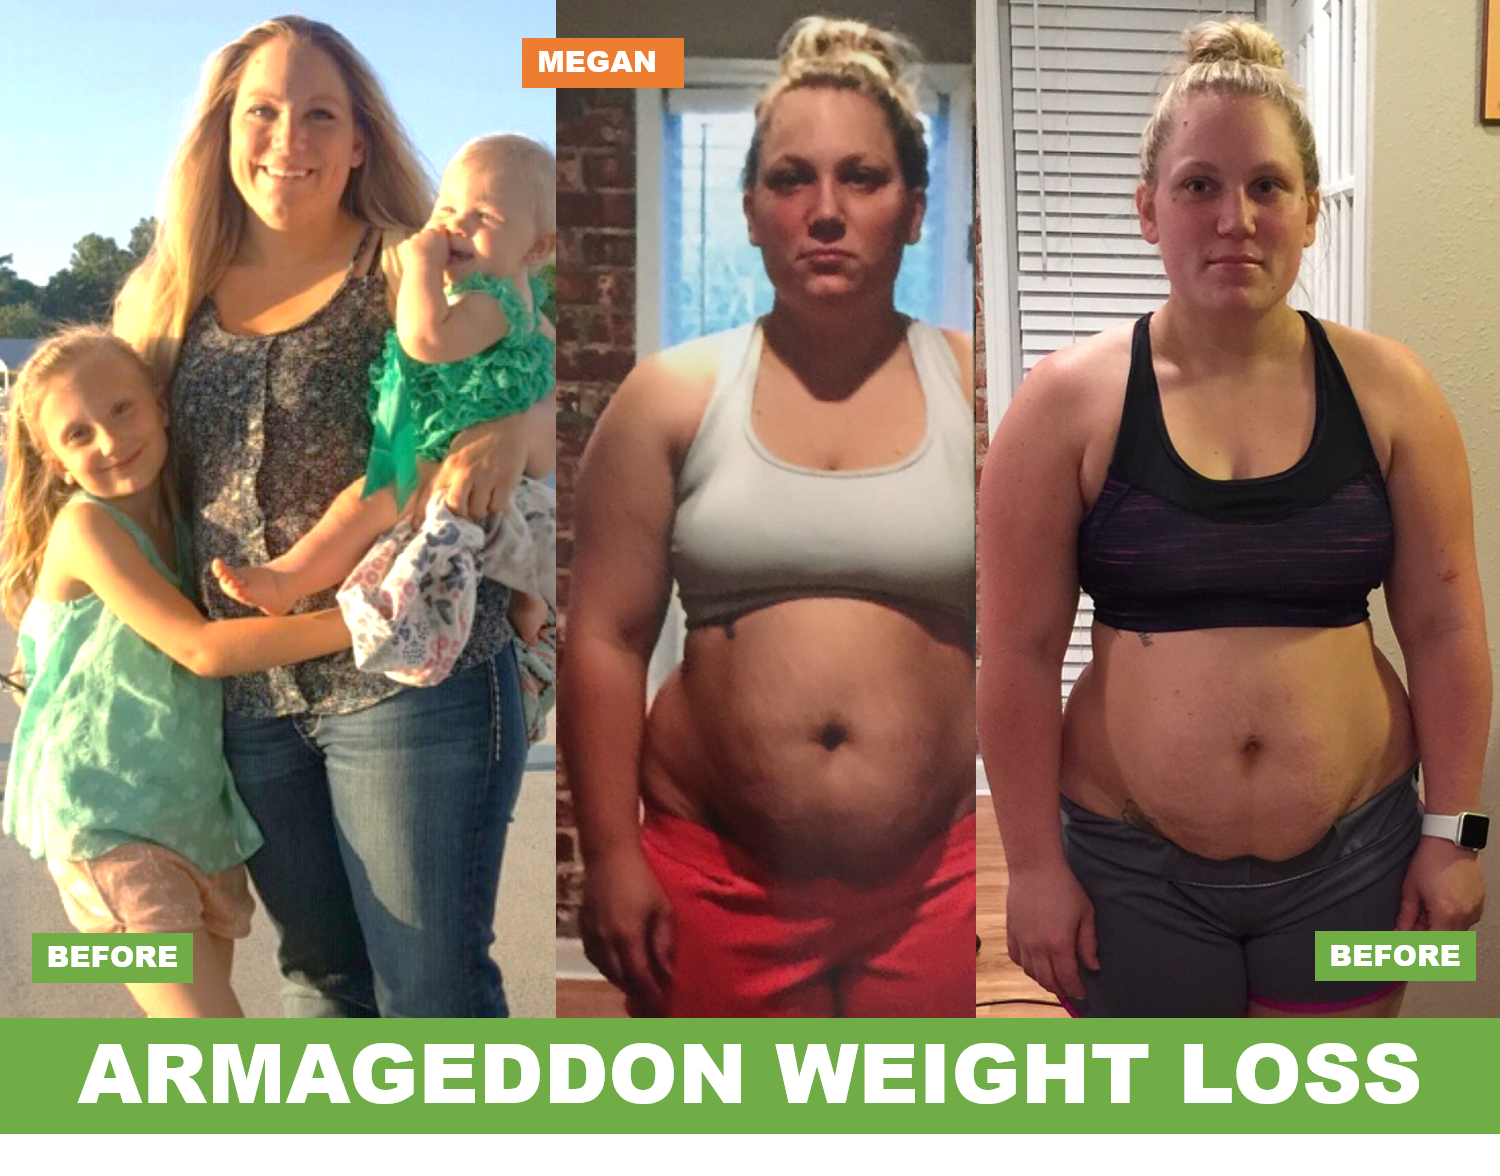 megan-green-florida-armageddon-weight-loss-program-best-weight-loss-dvd-for-women-post-pregnancy-weight-best-exercise-dvd-for-women-best-weight-loss-after-pregnant